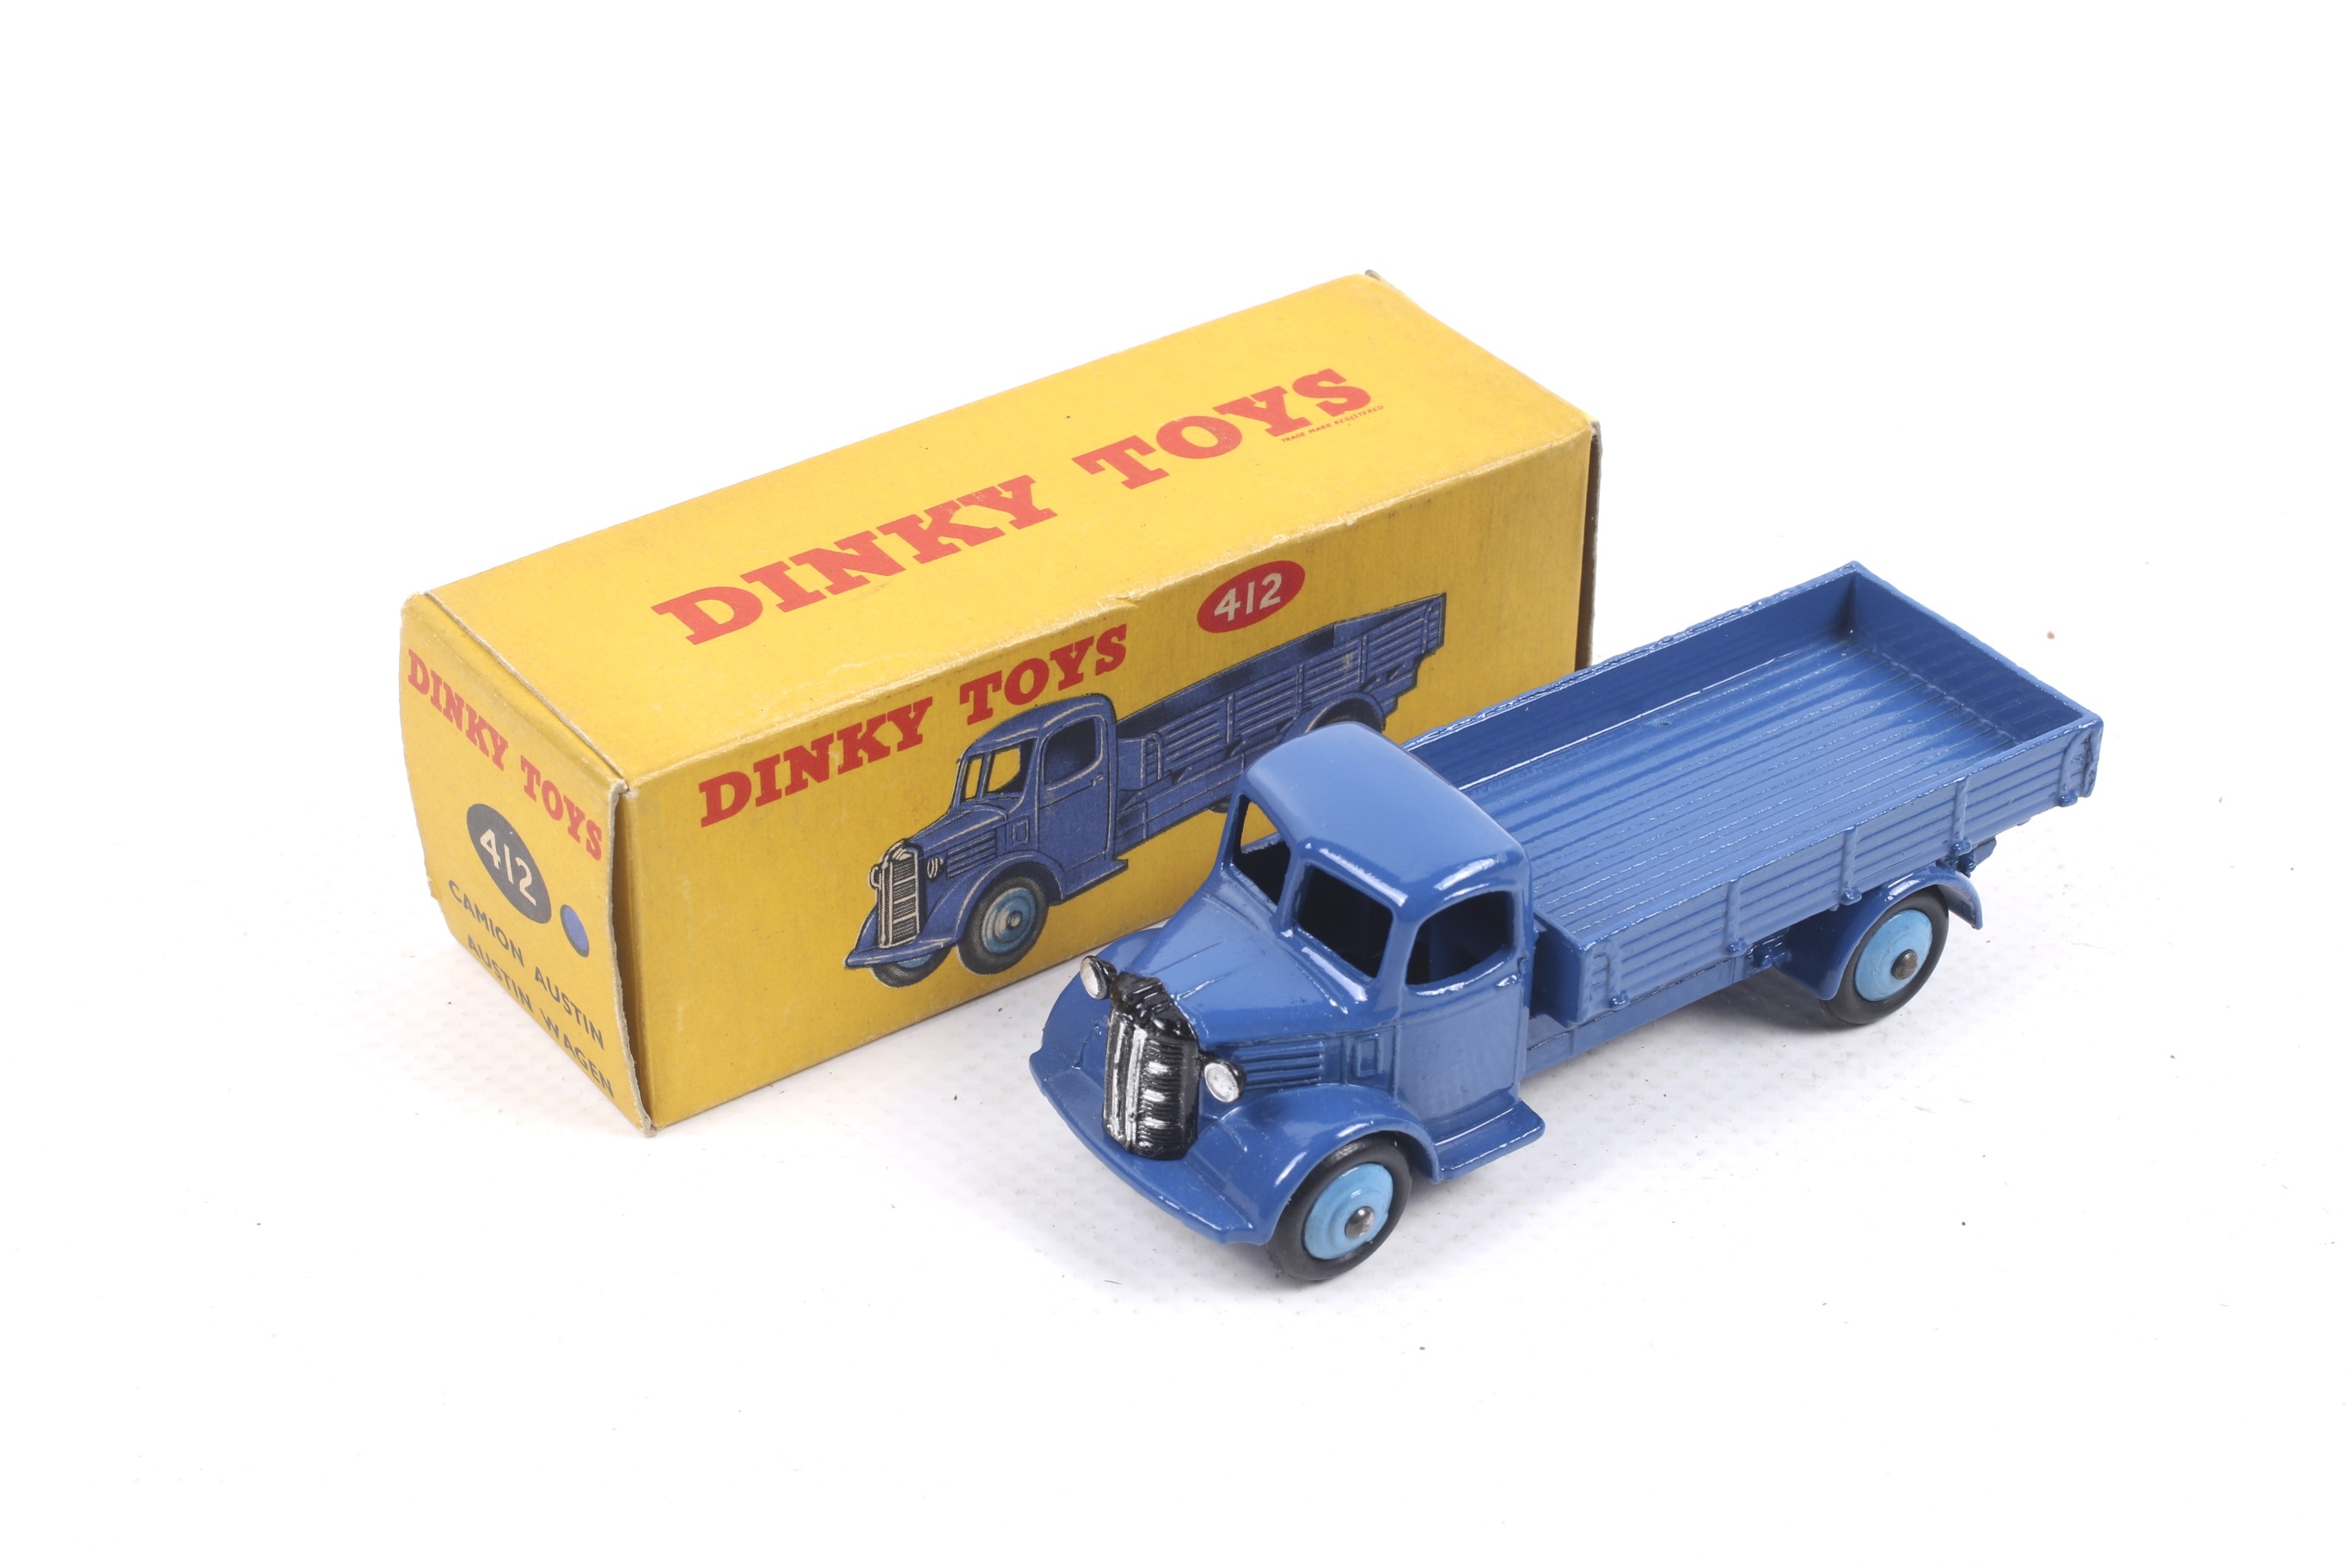 A Dinky diecast Austin Wagon. No. 412, dark blue body with light blue wheels, in original box.